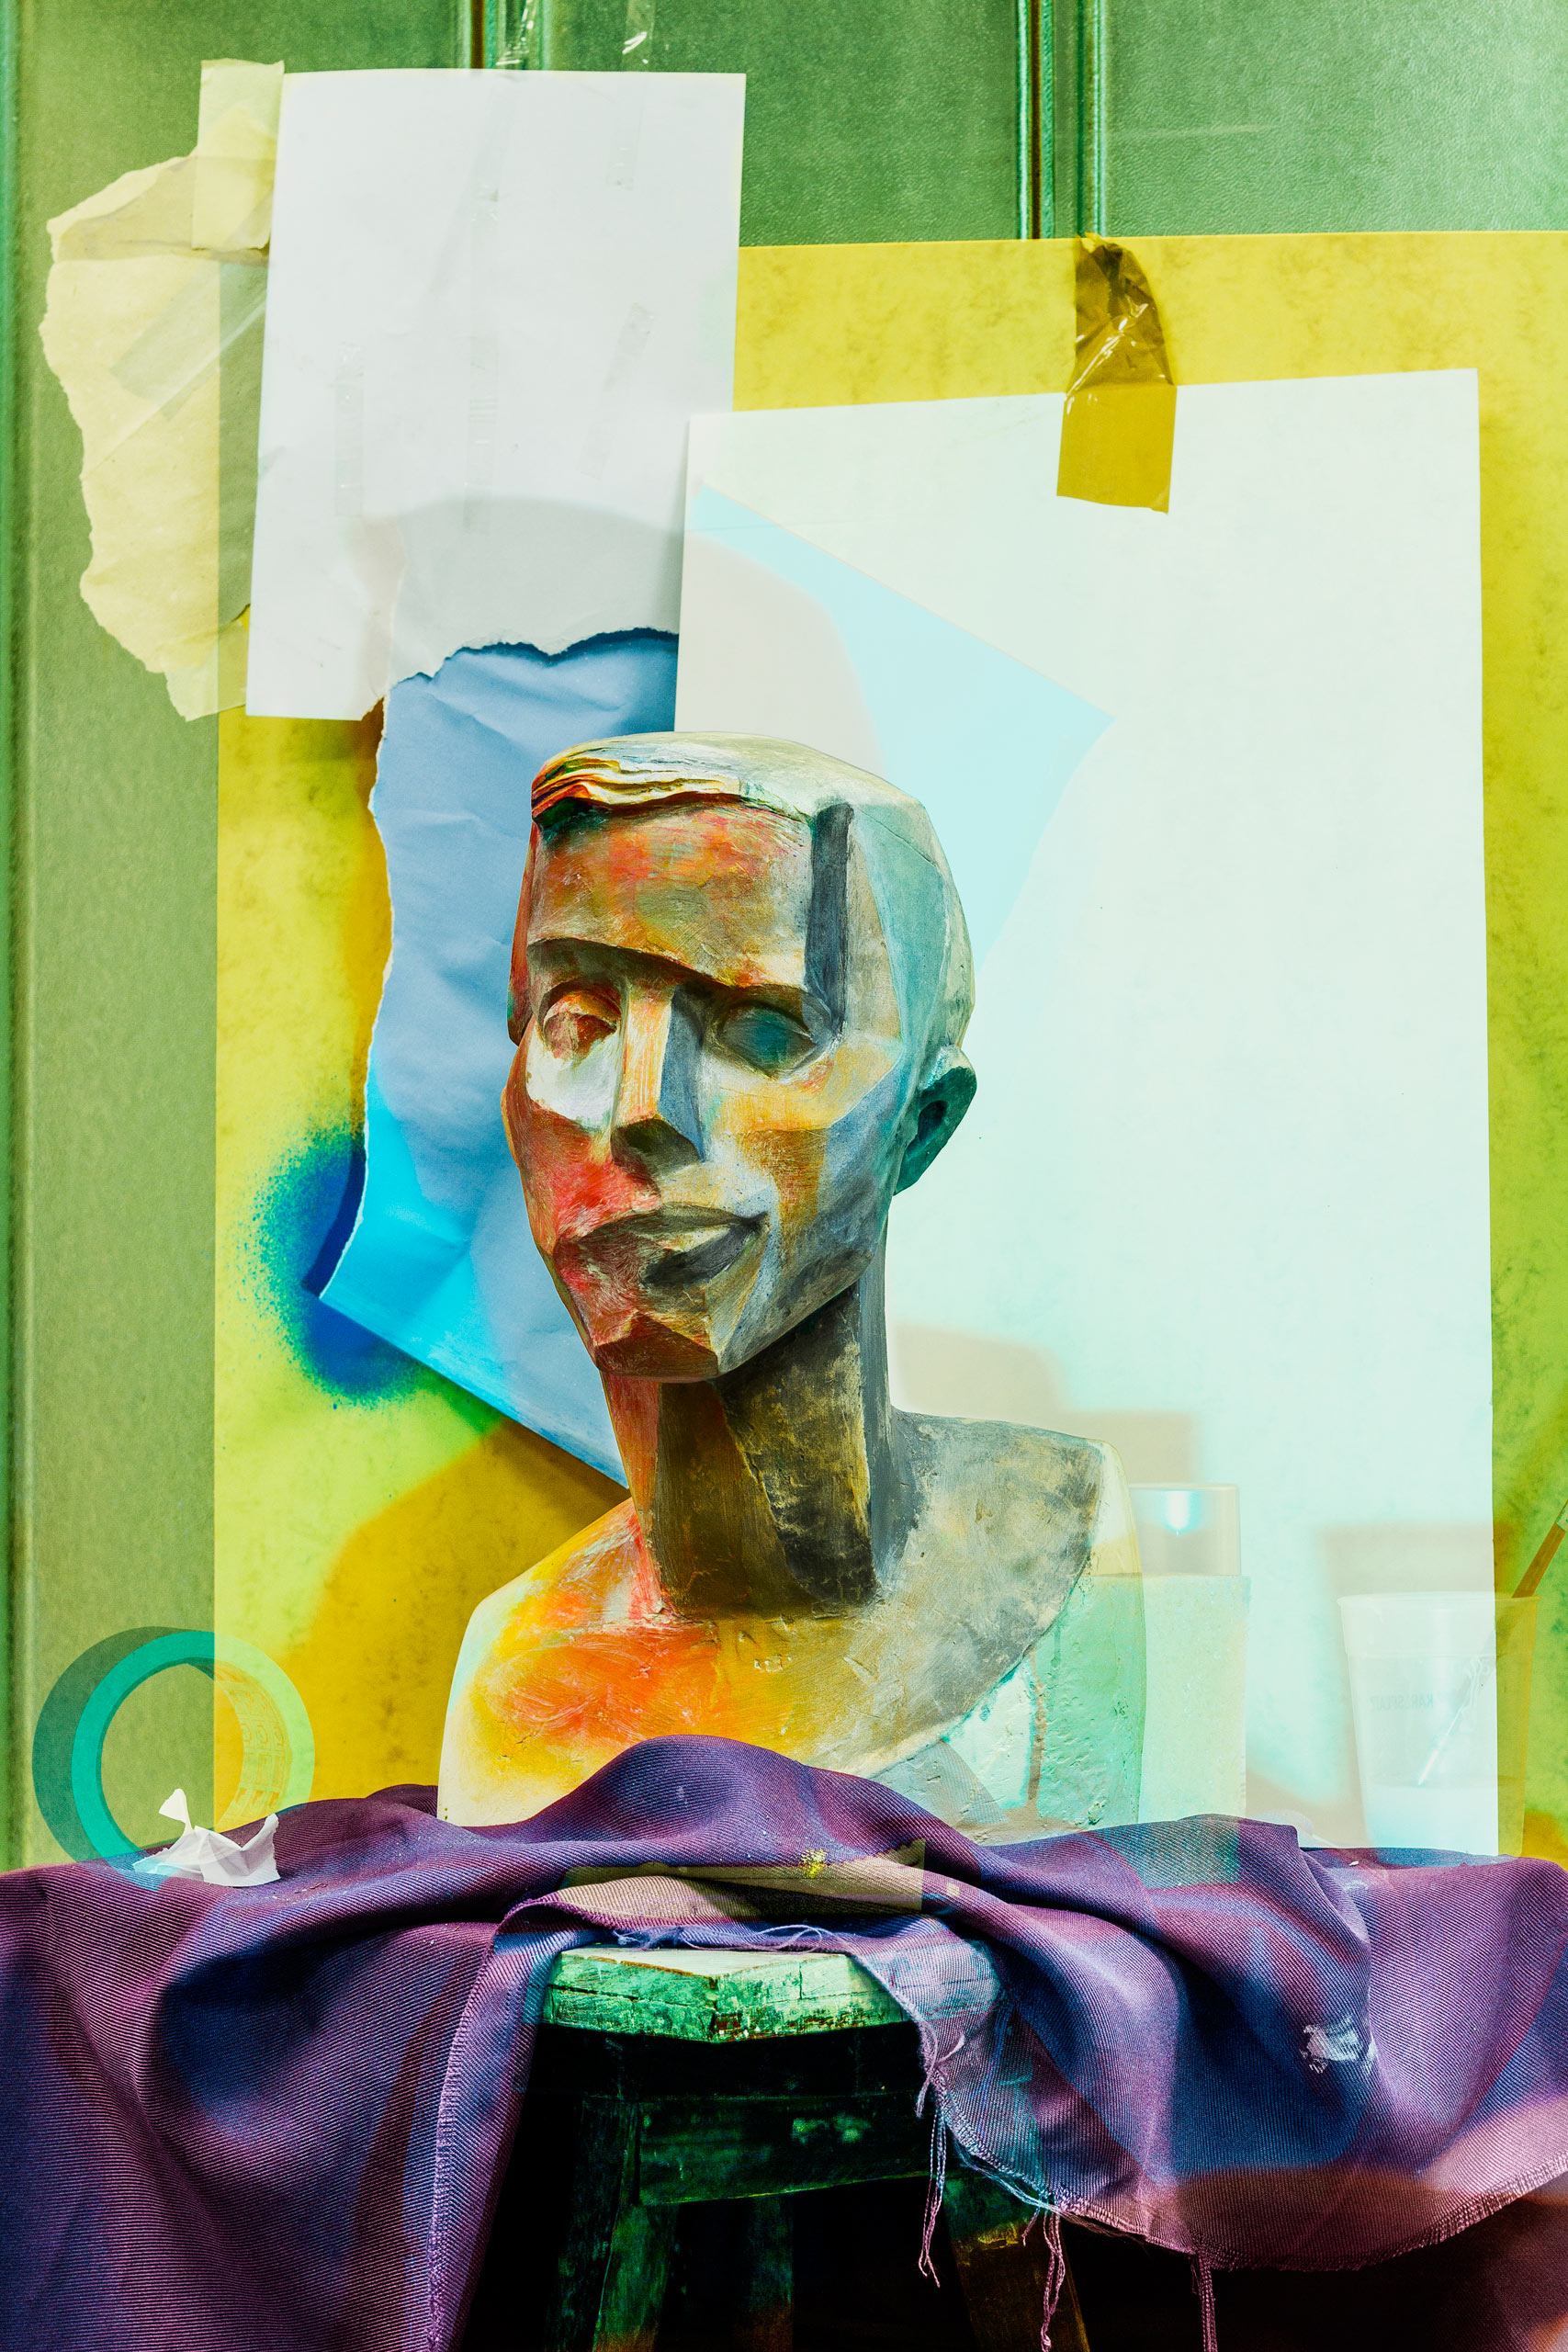 Painted plaster head (Self-portrait of a man in orange), 2015.